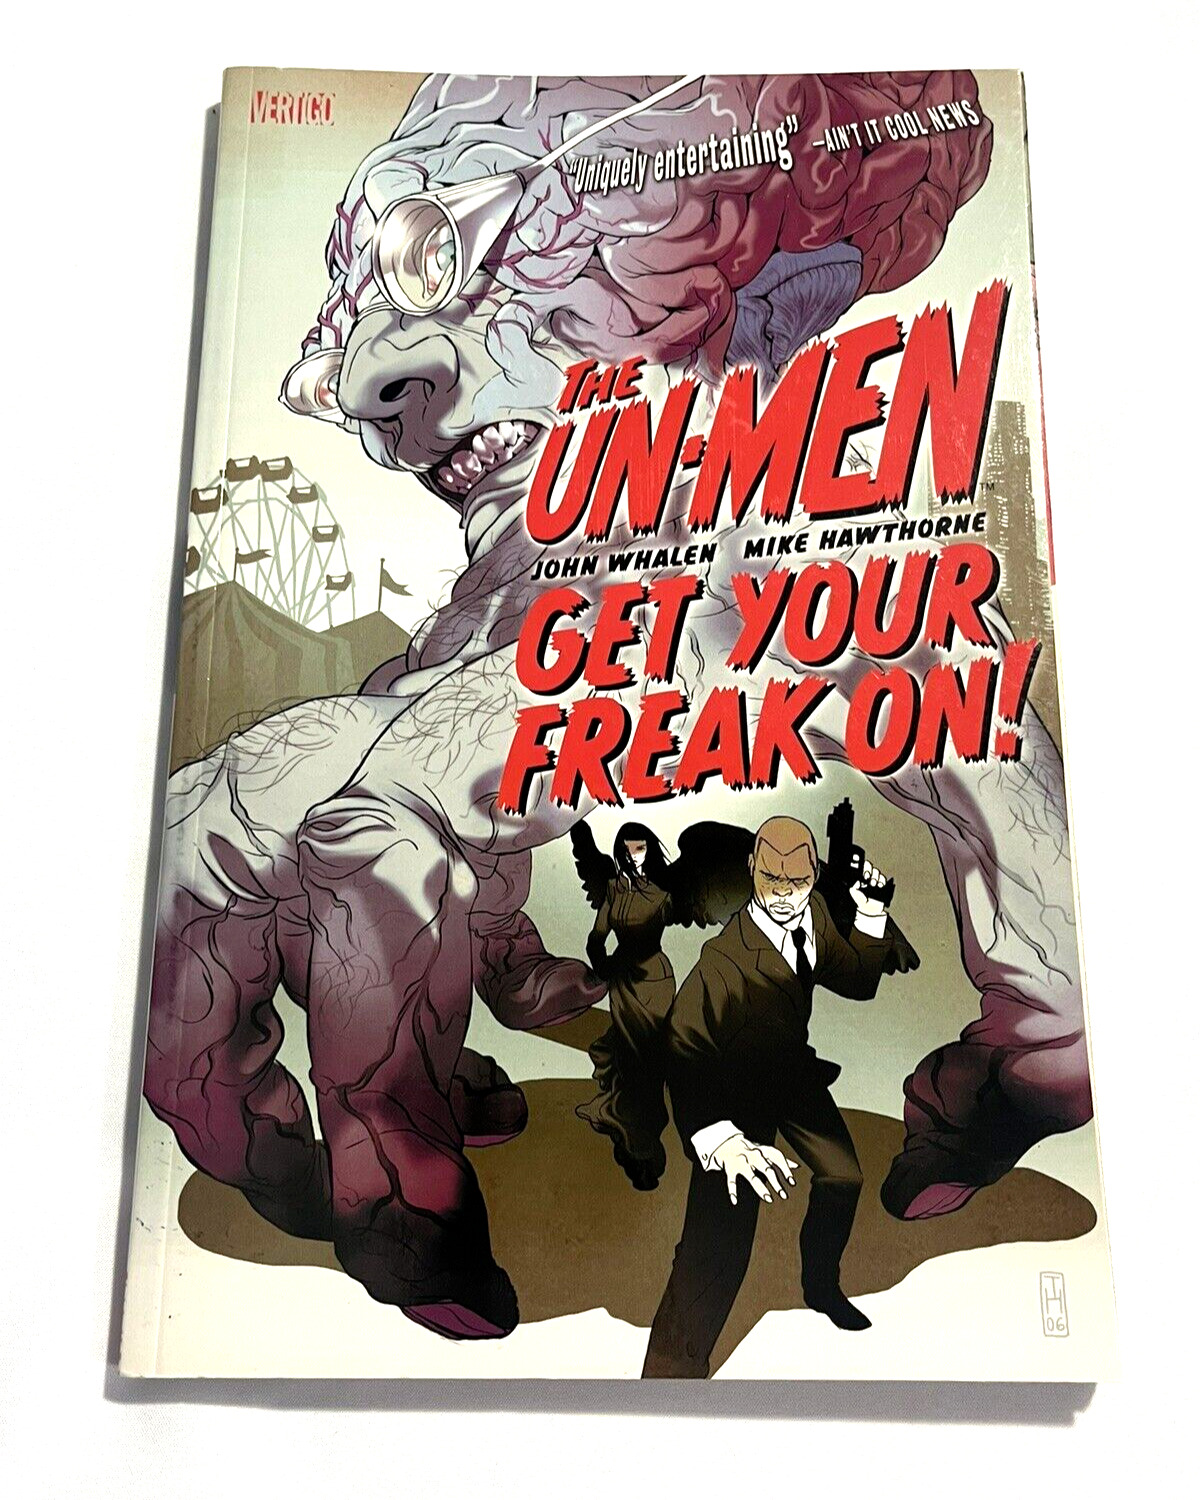 Un-Men Series Get Your Freak On by John Whalen 2008 Trade Paperback